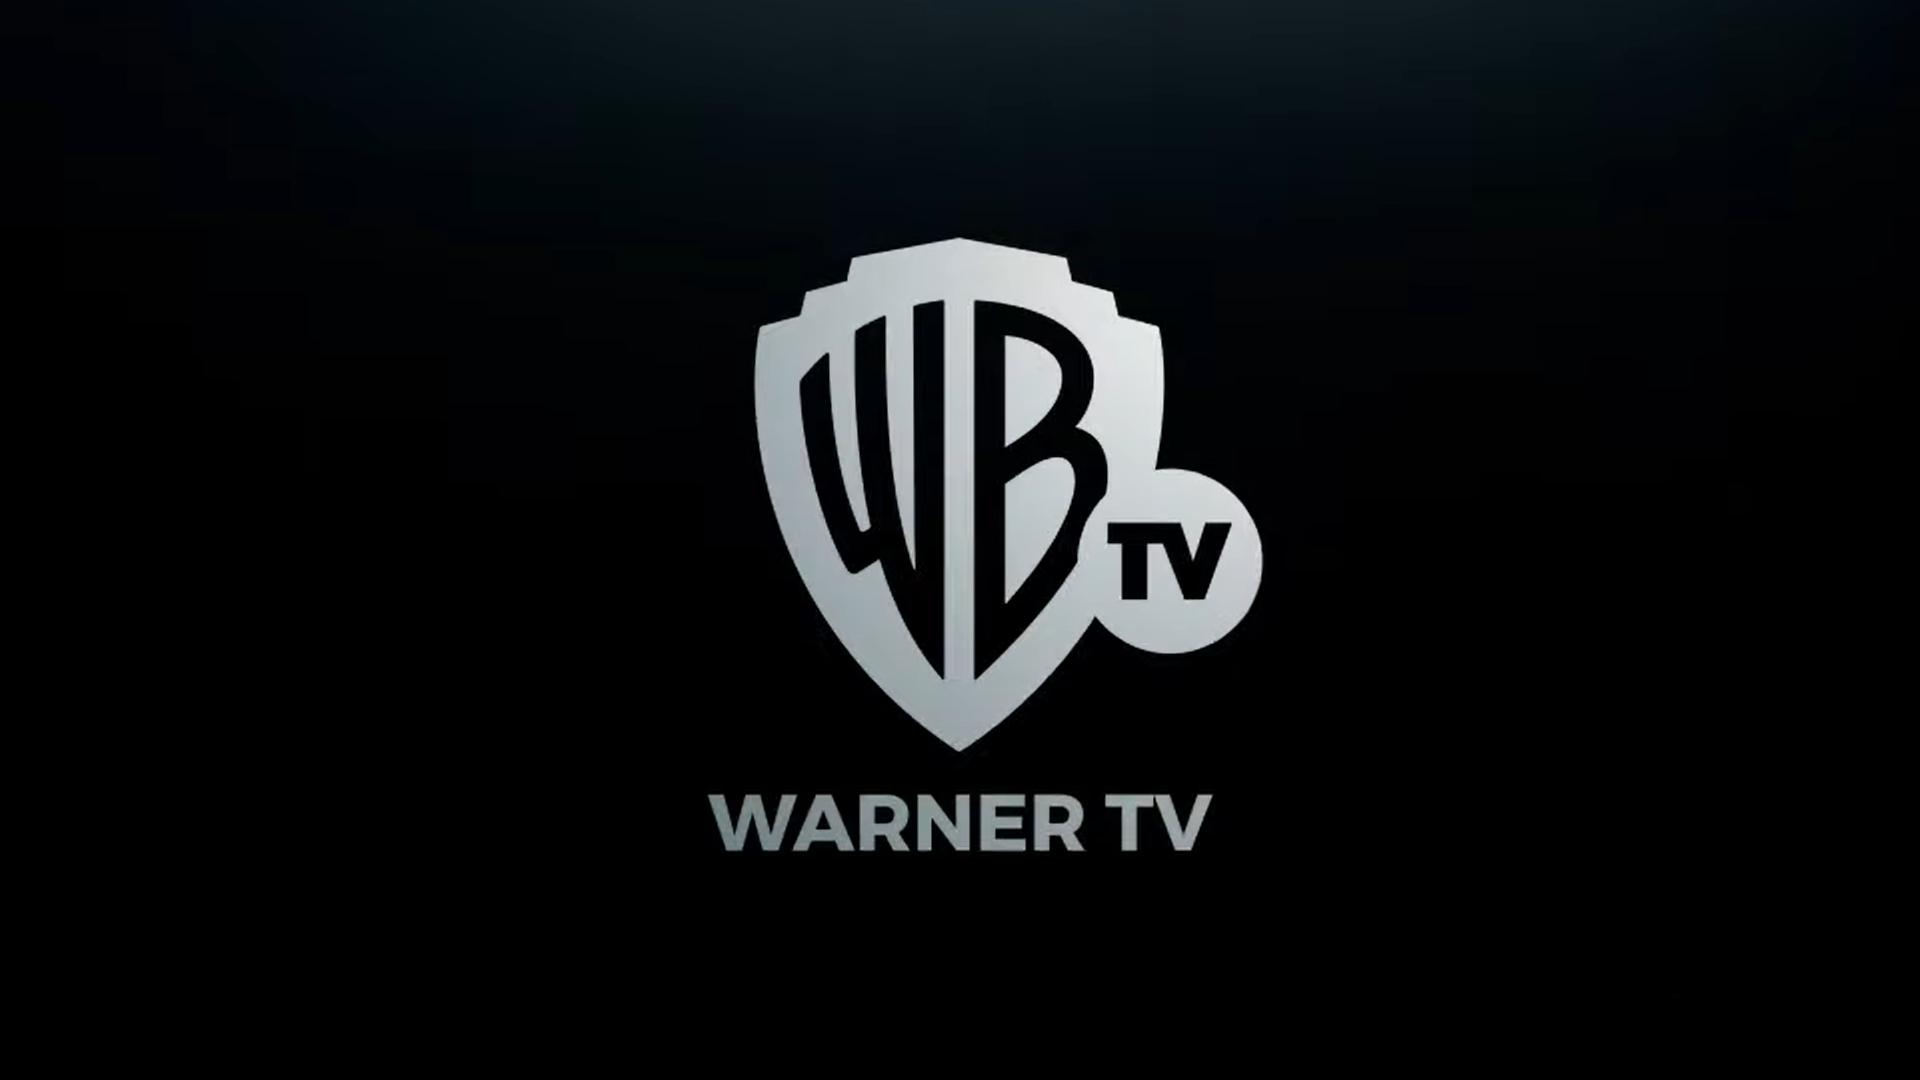 Warner TV